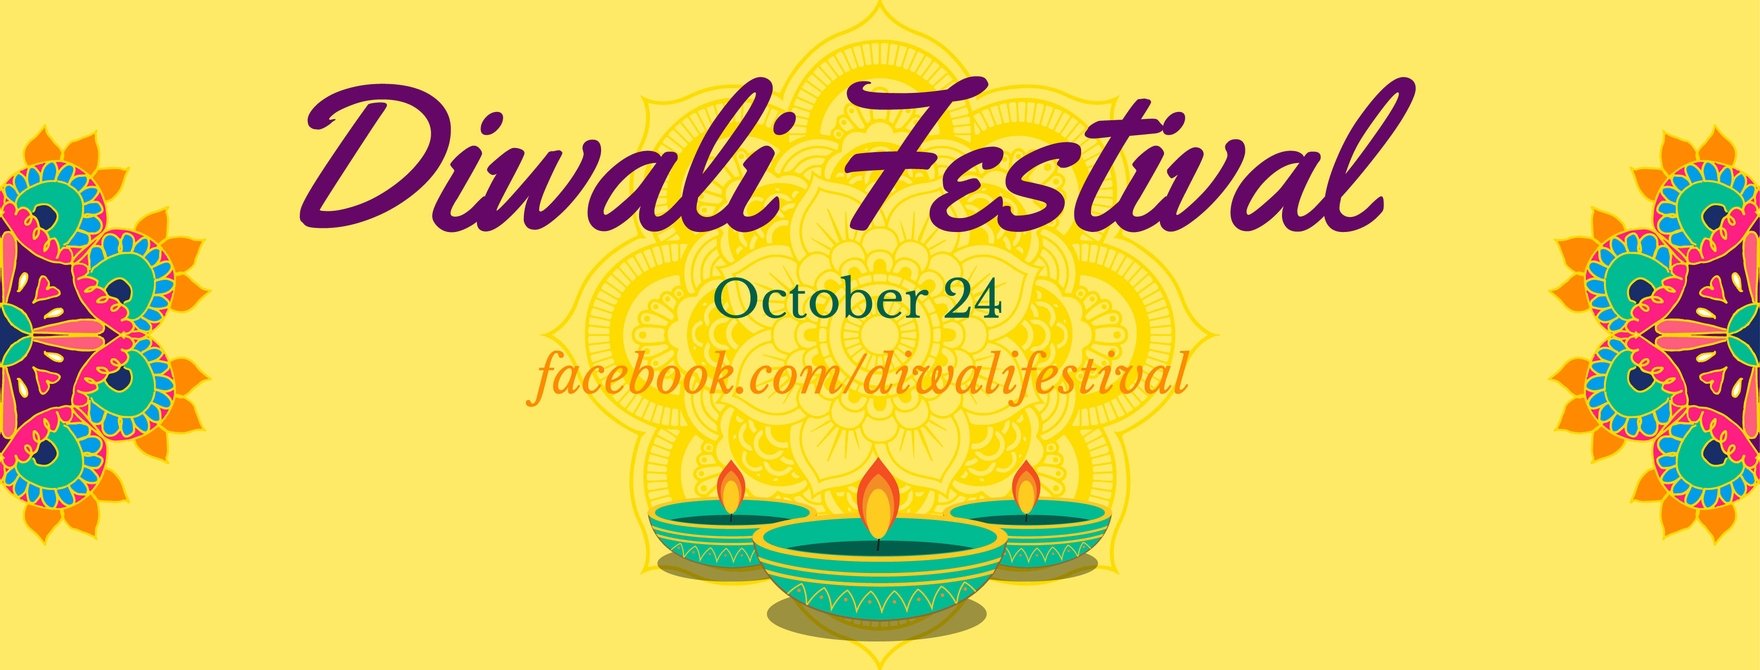 Free Diwali Facebook Cover Banner